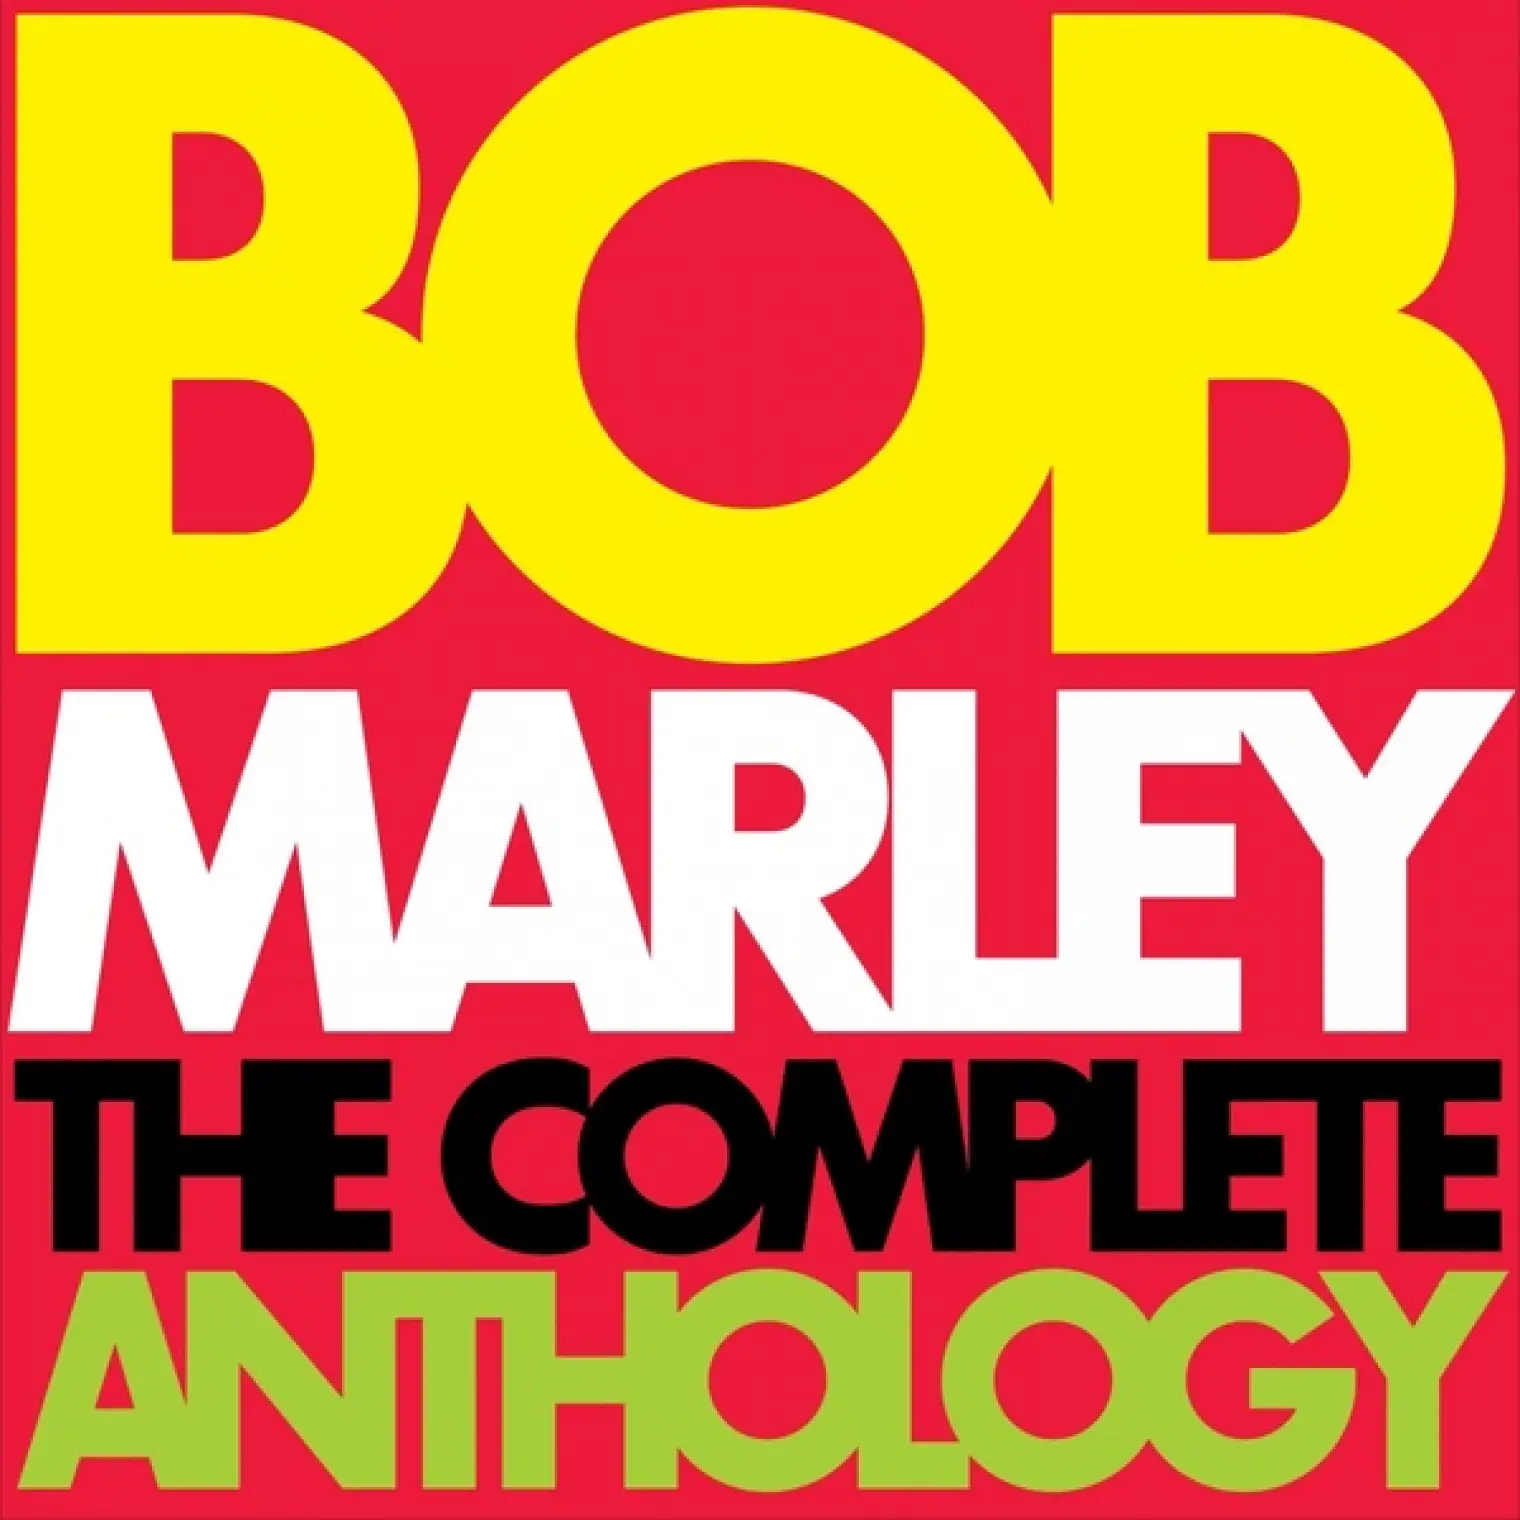 Bob Marley: The Complete Anthology -  Bob Marley 